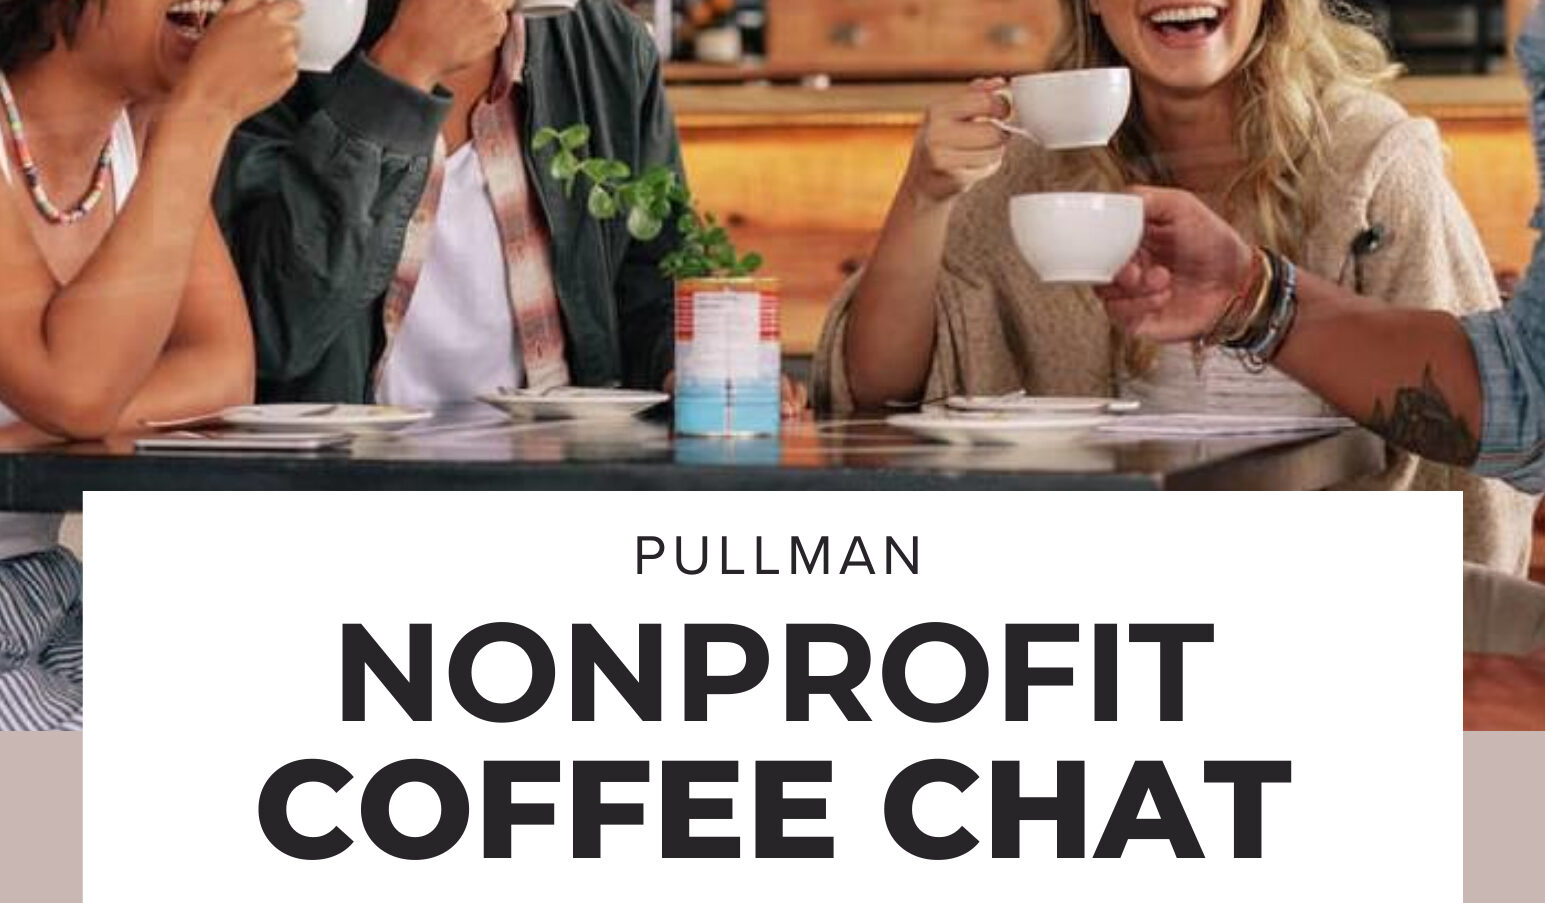 Pullman Nonprofit Coffee Chat